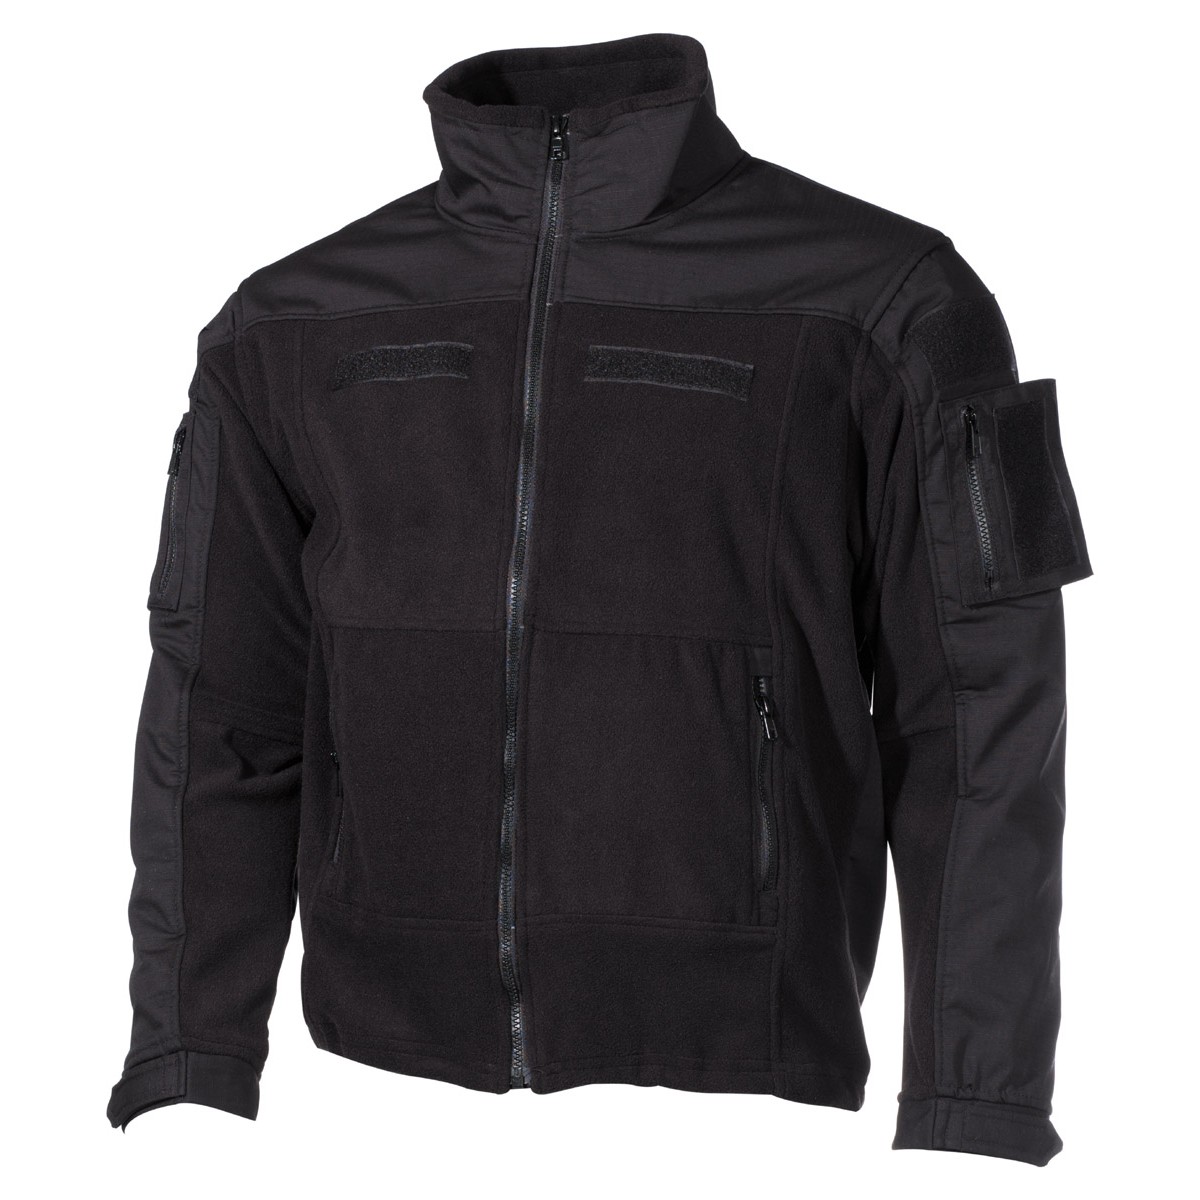 Professional Tactical Military Fleece Jacket COMBAT High Defense - Black